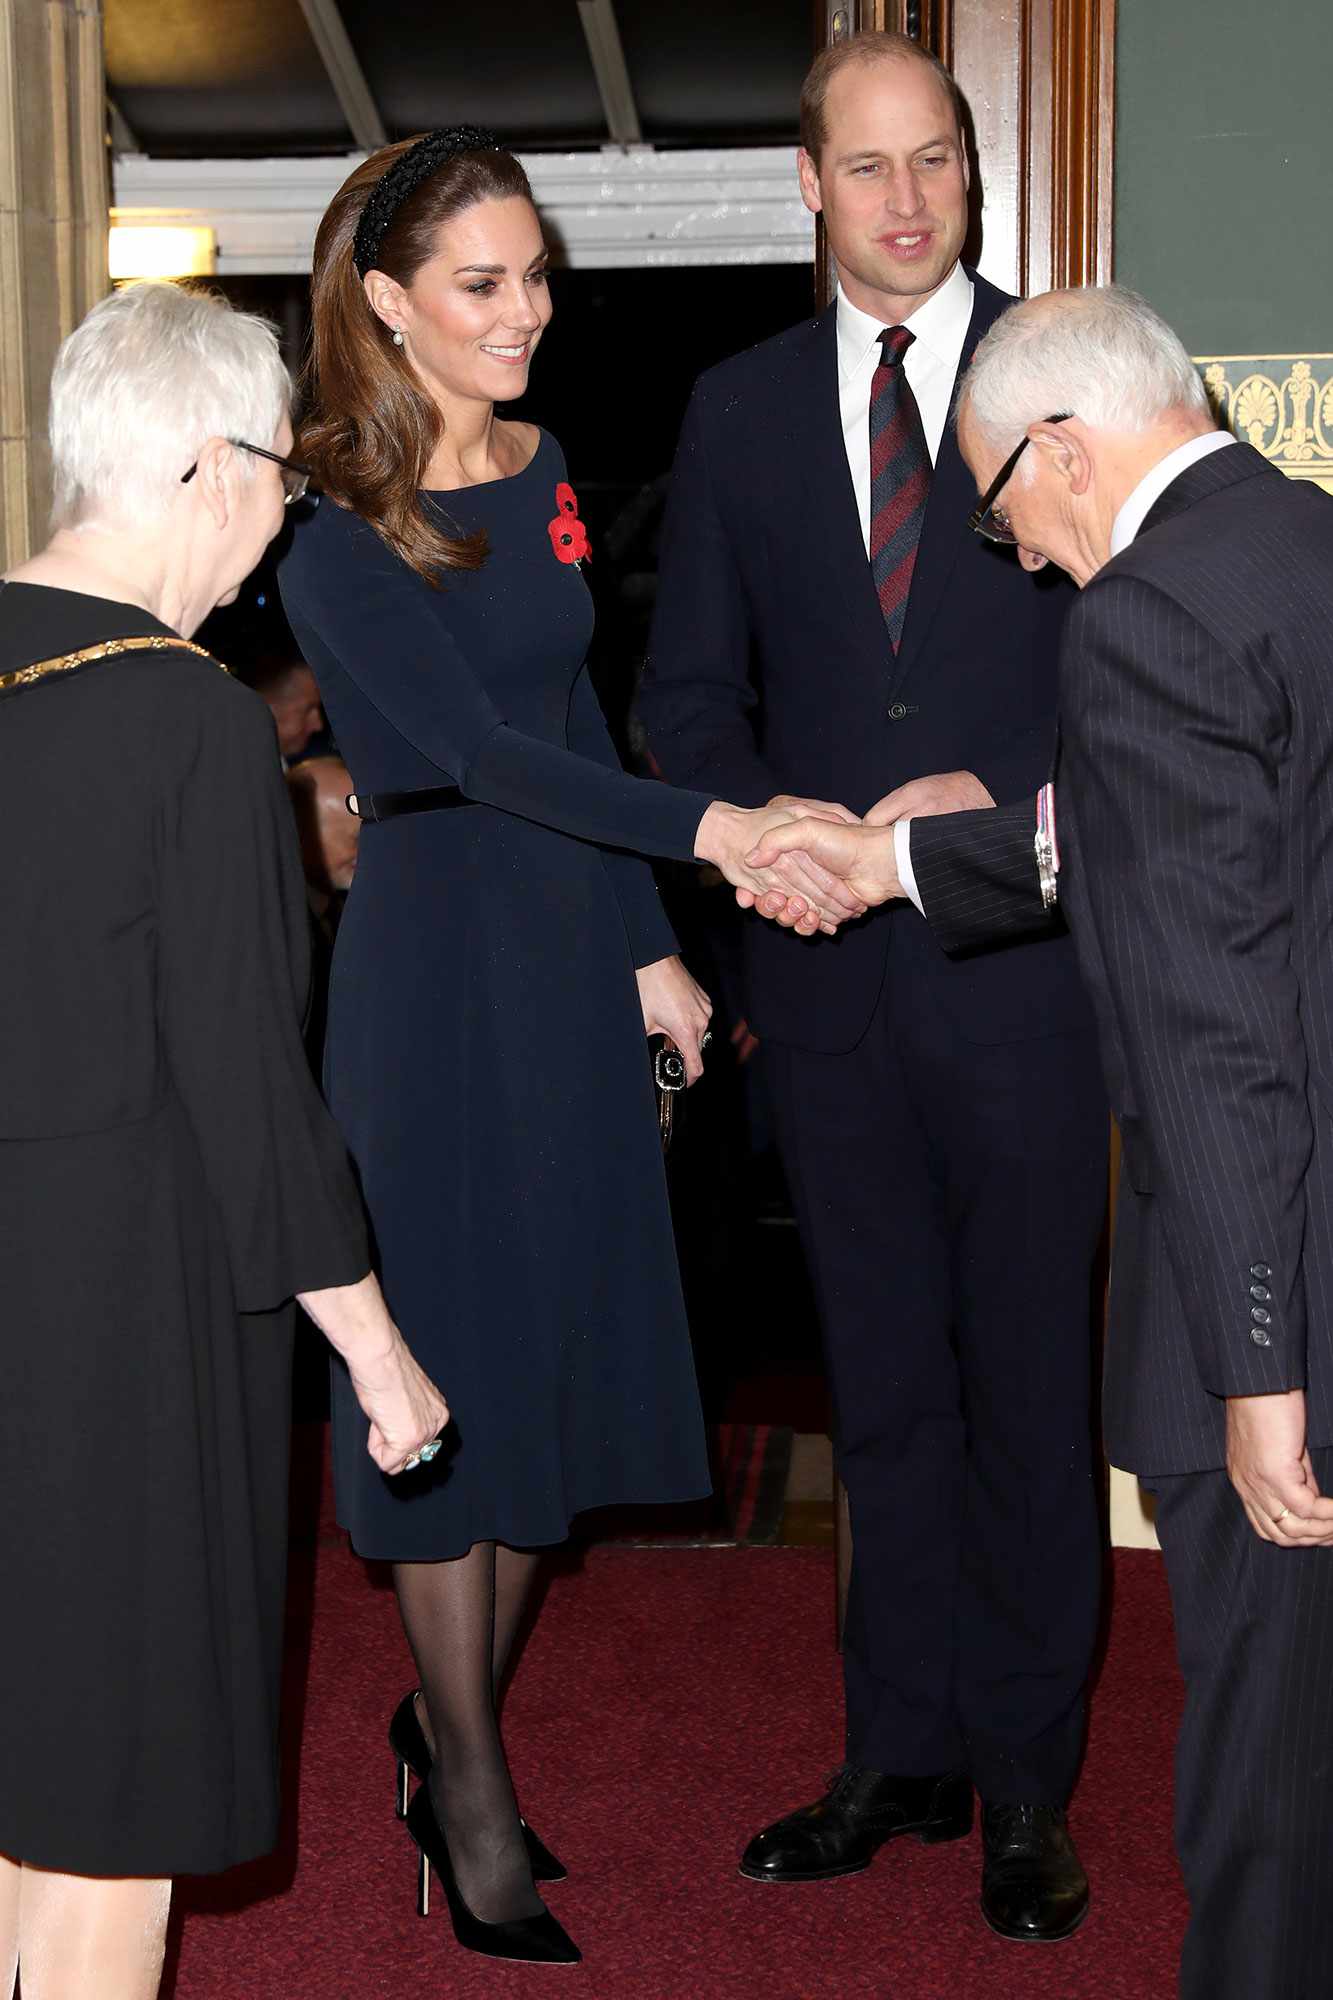 Catherine, Duchess of Cambridge and Prince William, Duke of Cambridge